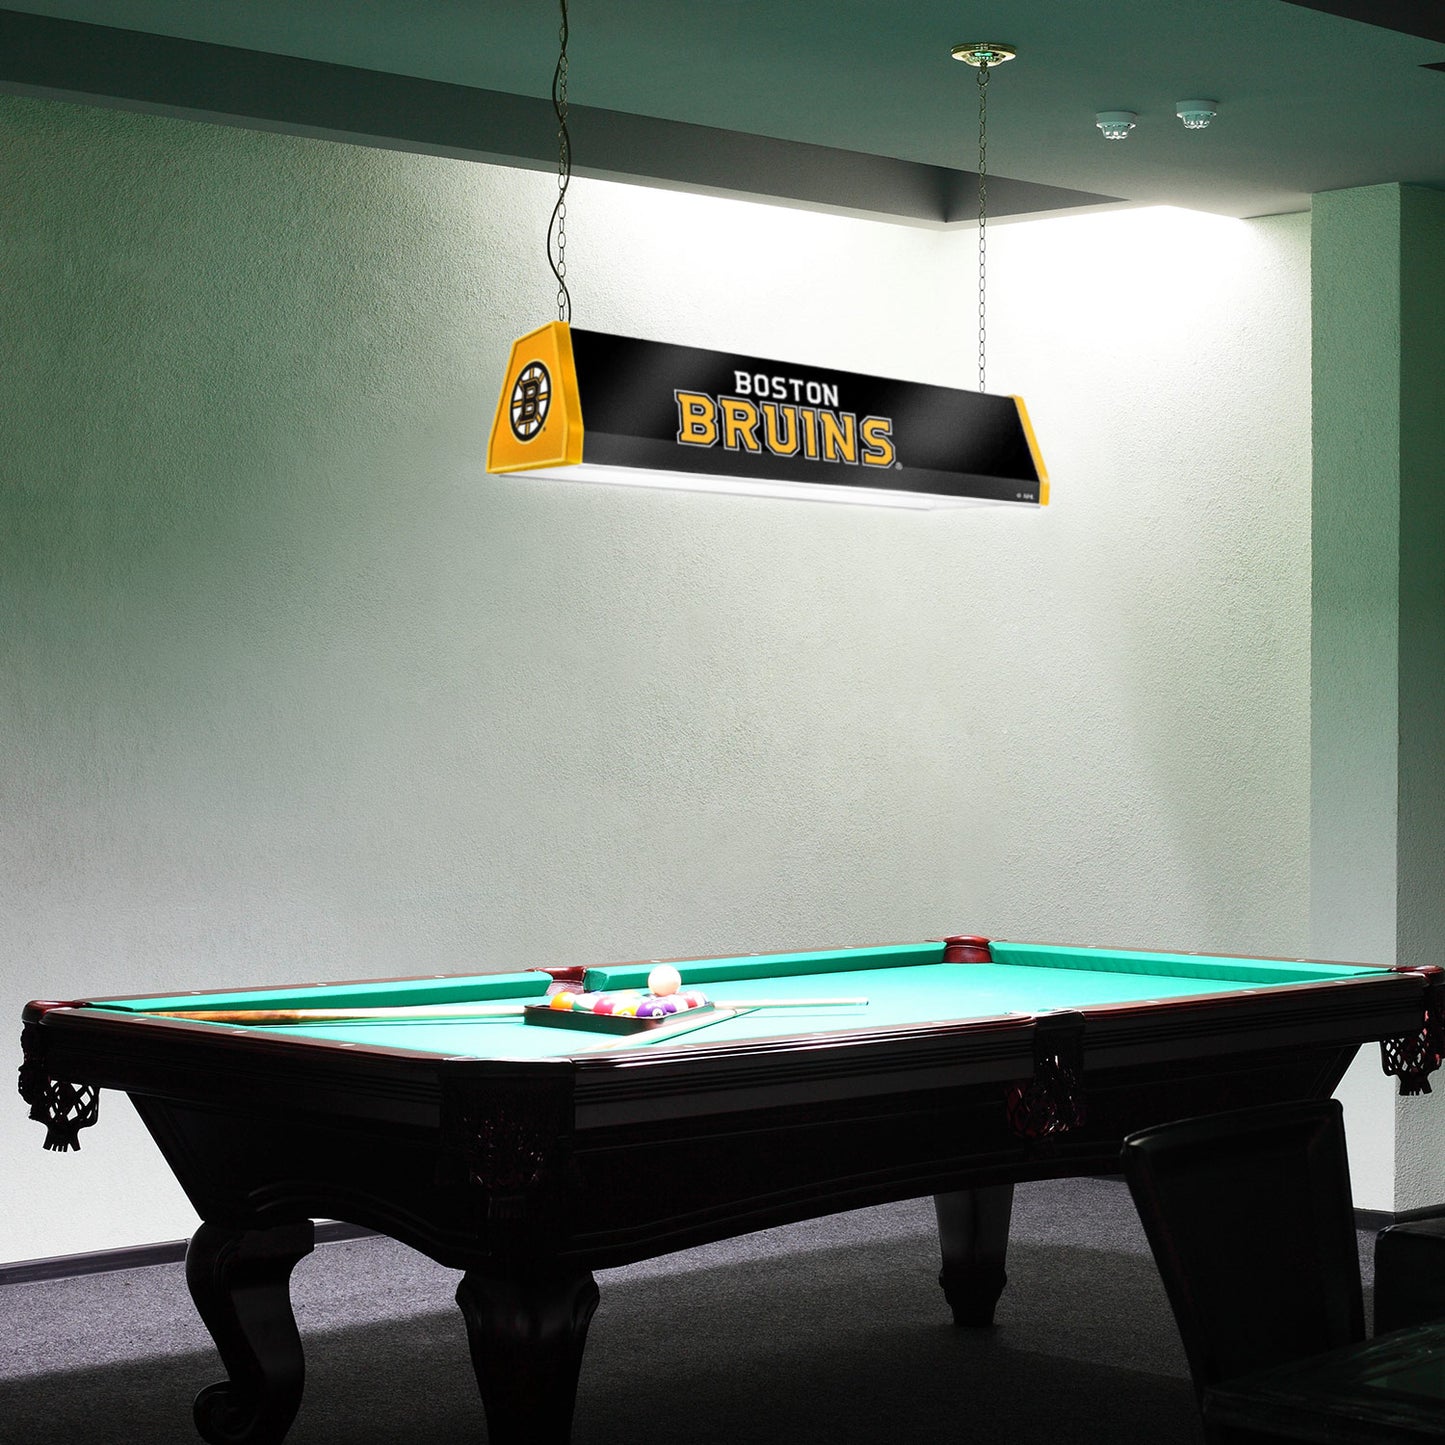 Boston Bruins Standard Pool Table Light Room View